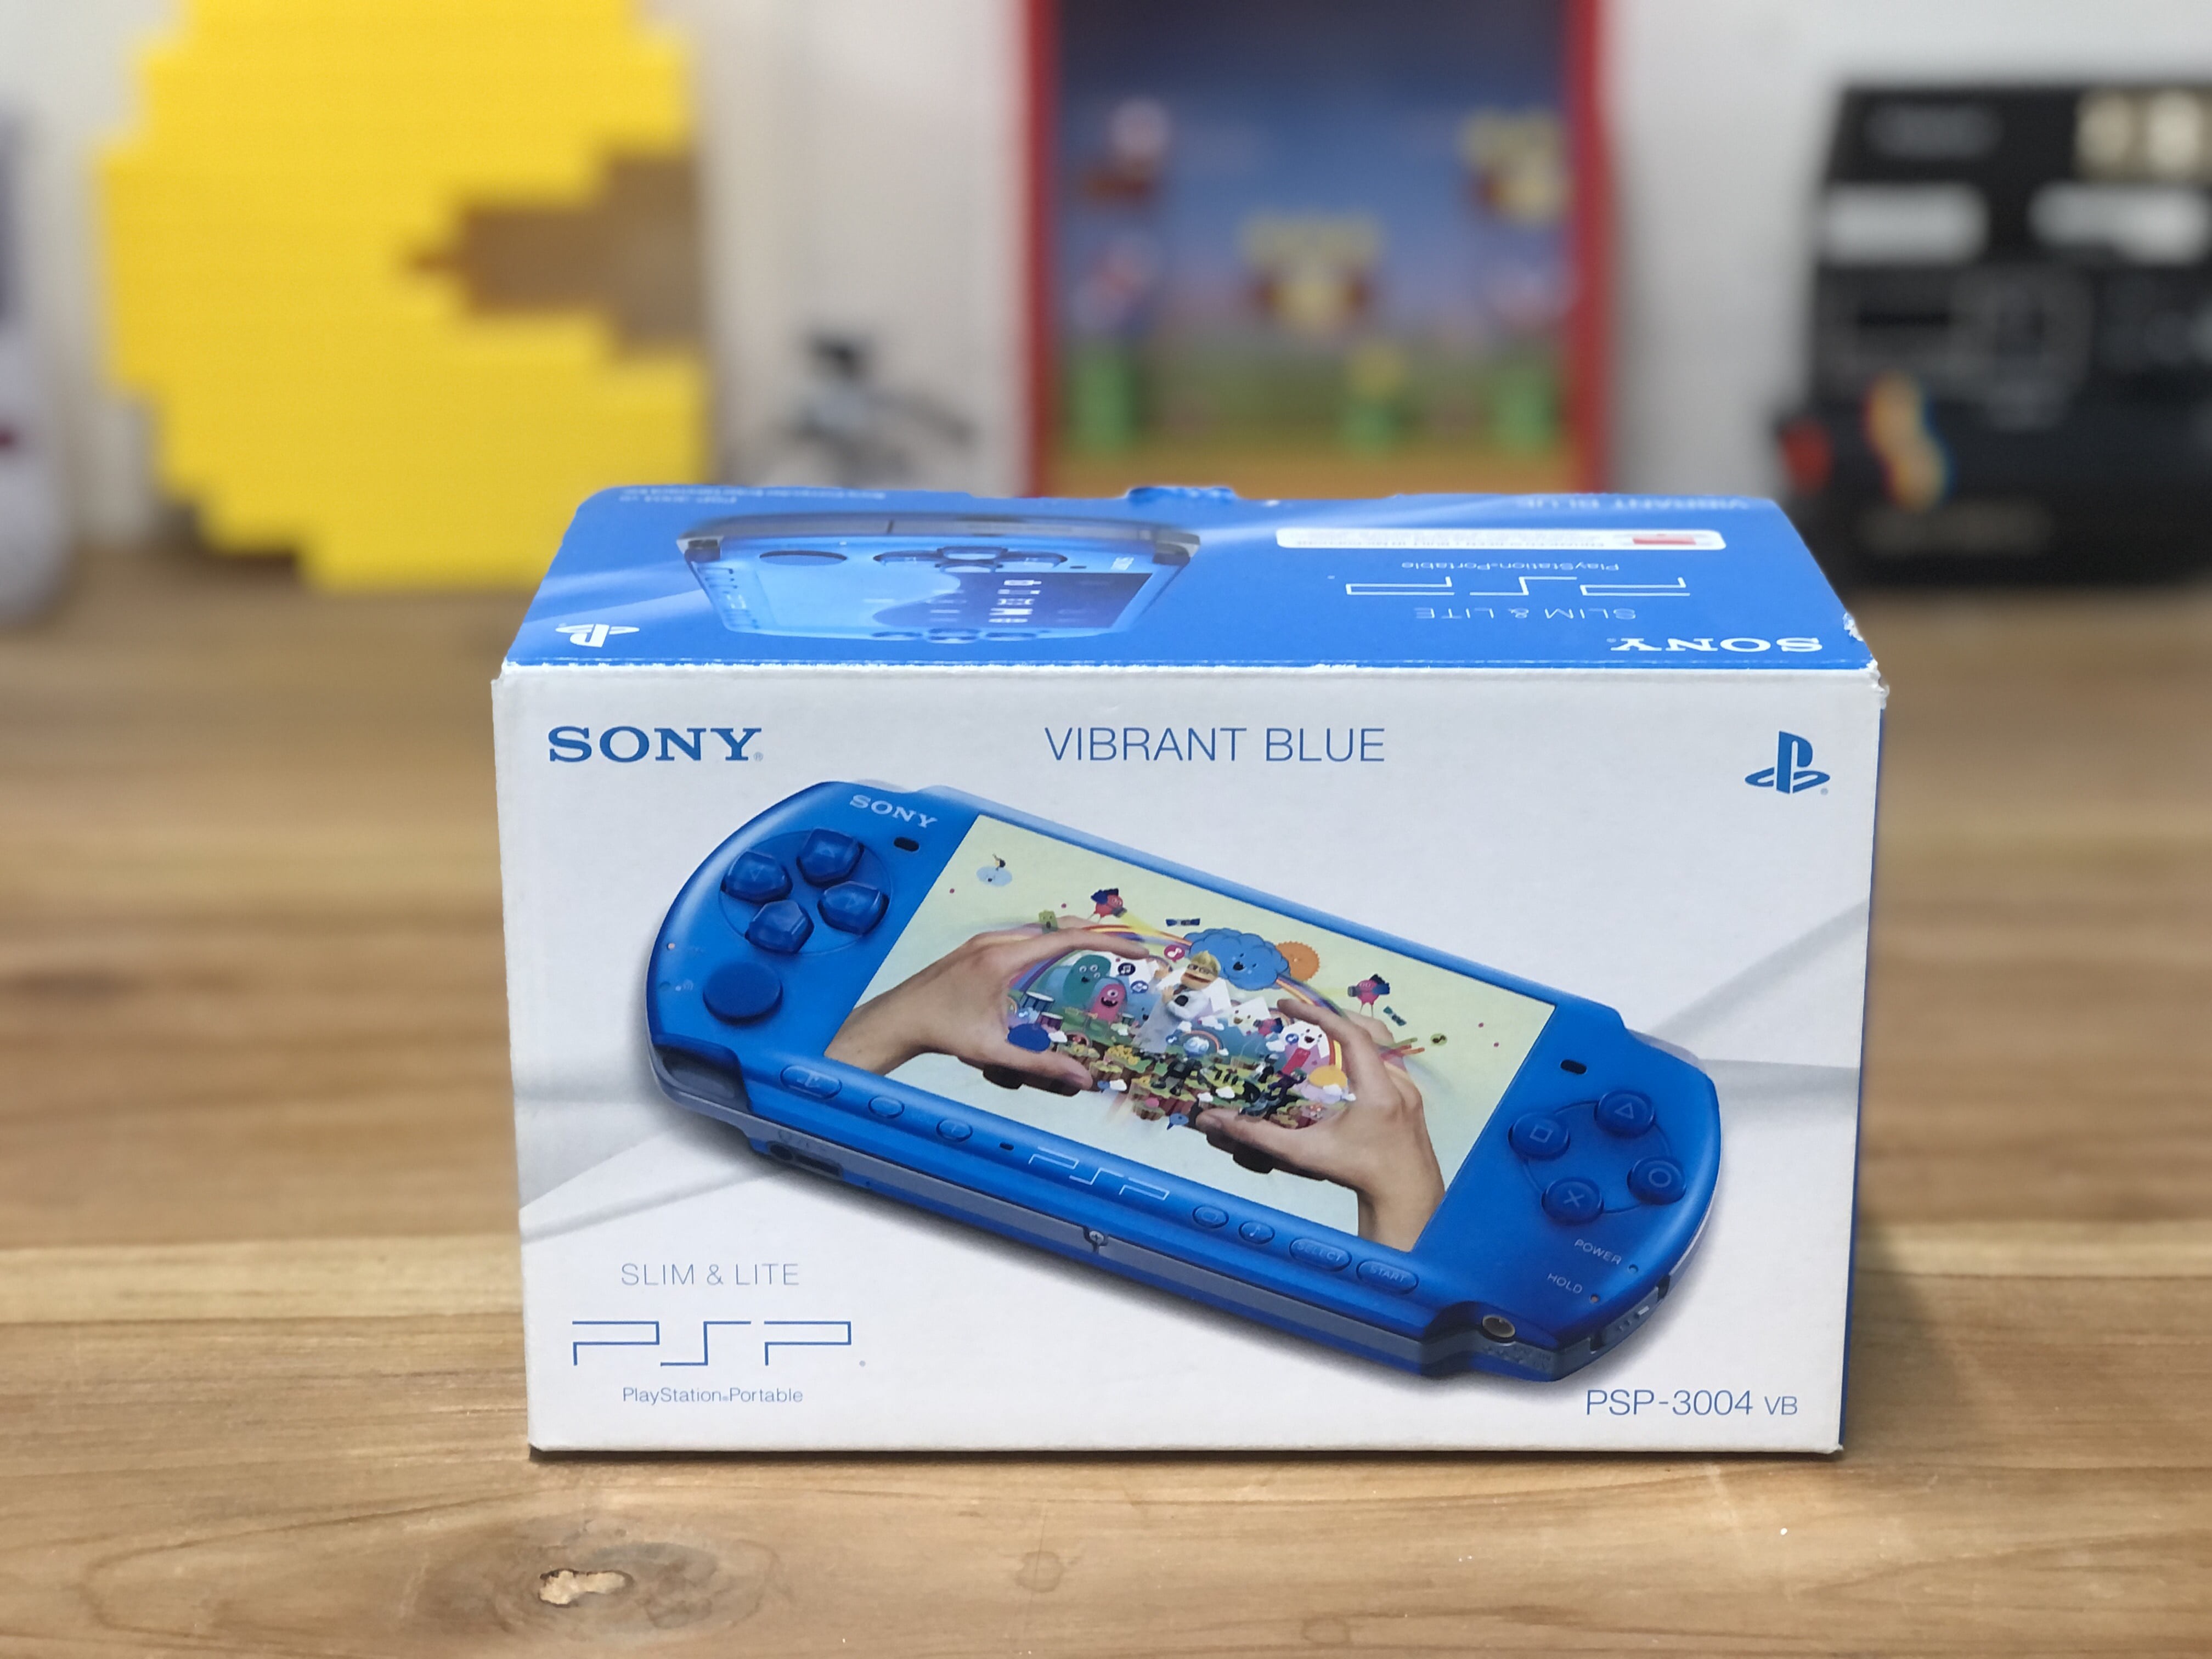 Playstation Portable Slim & Lite PSP 3000 - Vibrant Blue [Complete] - Playstation Portable Hardware - 6